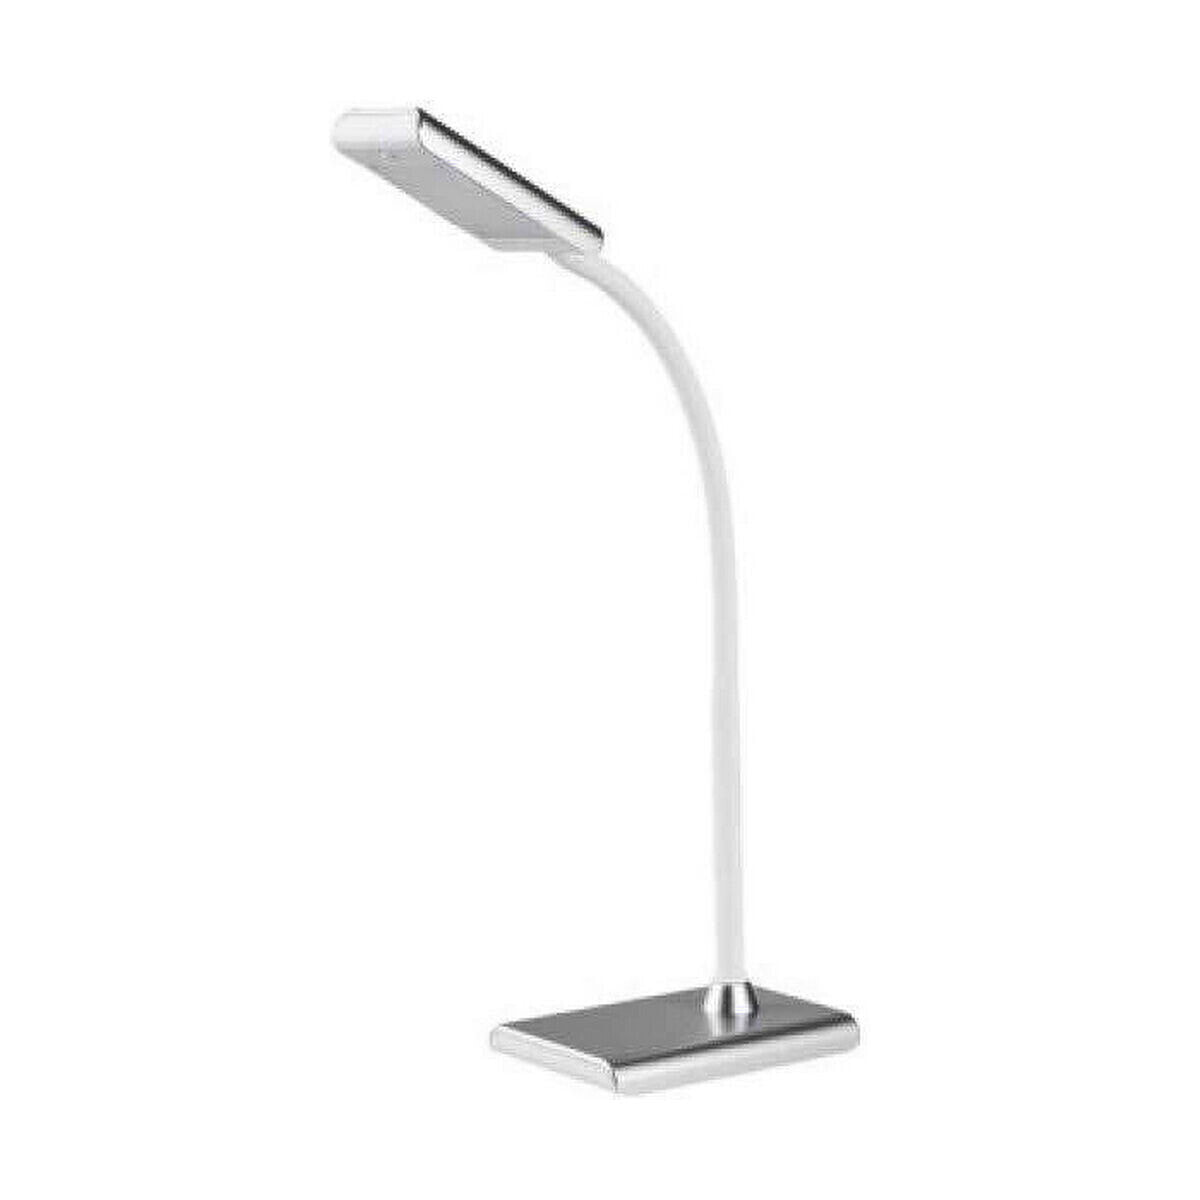 Desk lamp EDM Flexo/Desk lamp Silver polypropylene 400 lm (9 x 13 x 33 cm)